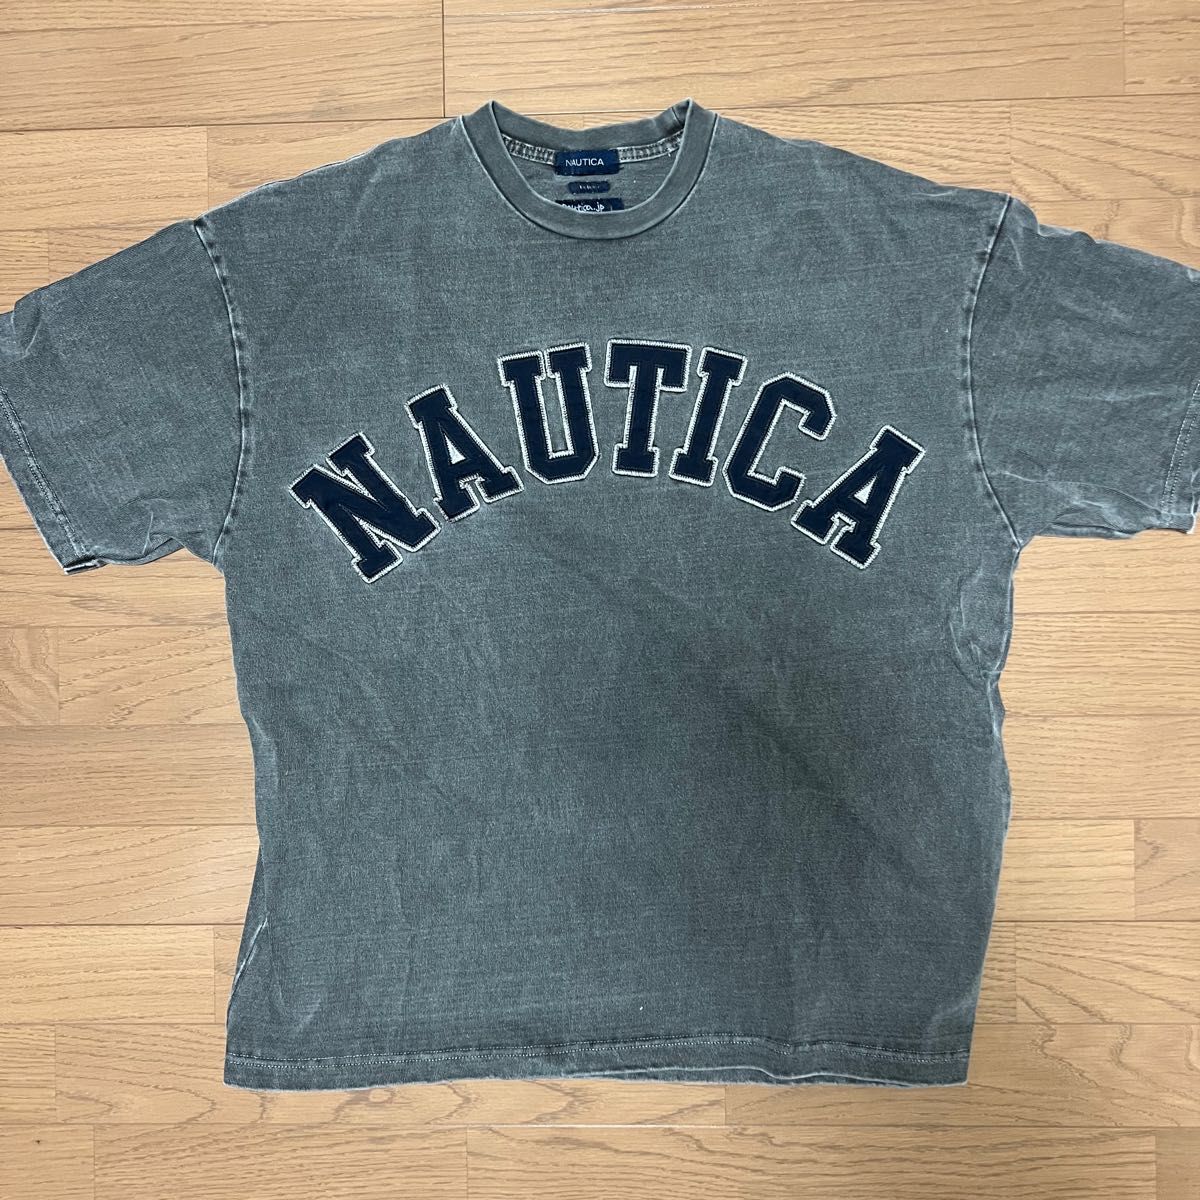 【NAUTICA】NAUTICA Logo Tee チャコールグレー “TOO HEAVY” Mサイズ 半袖Tシャツ